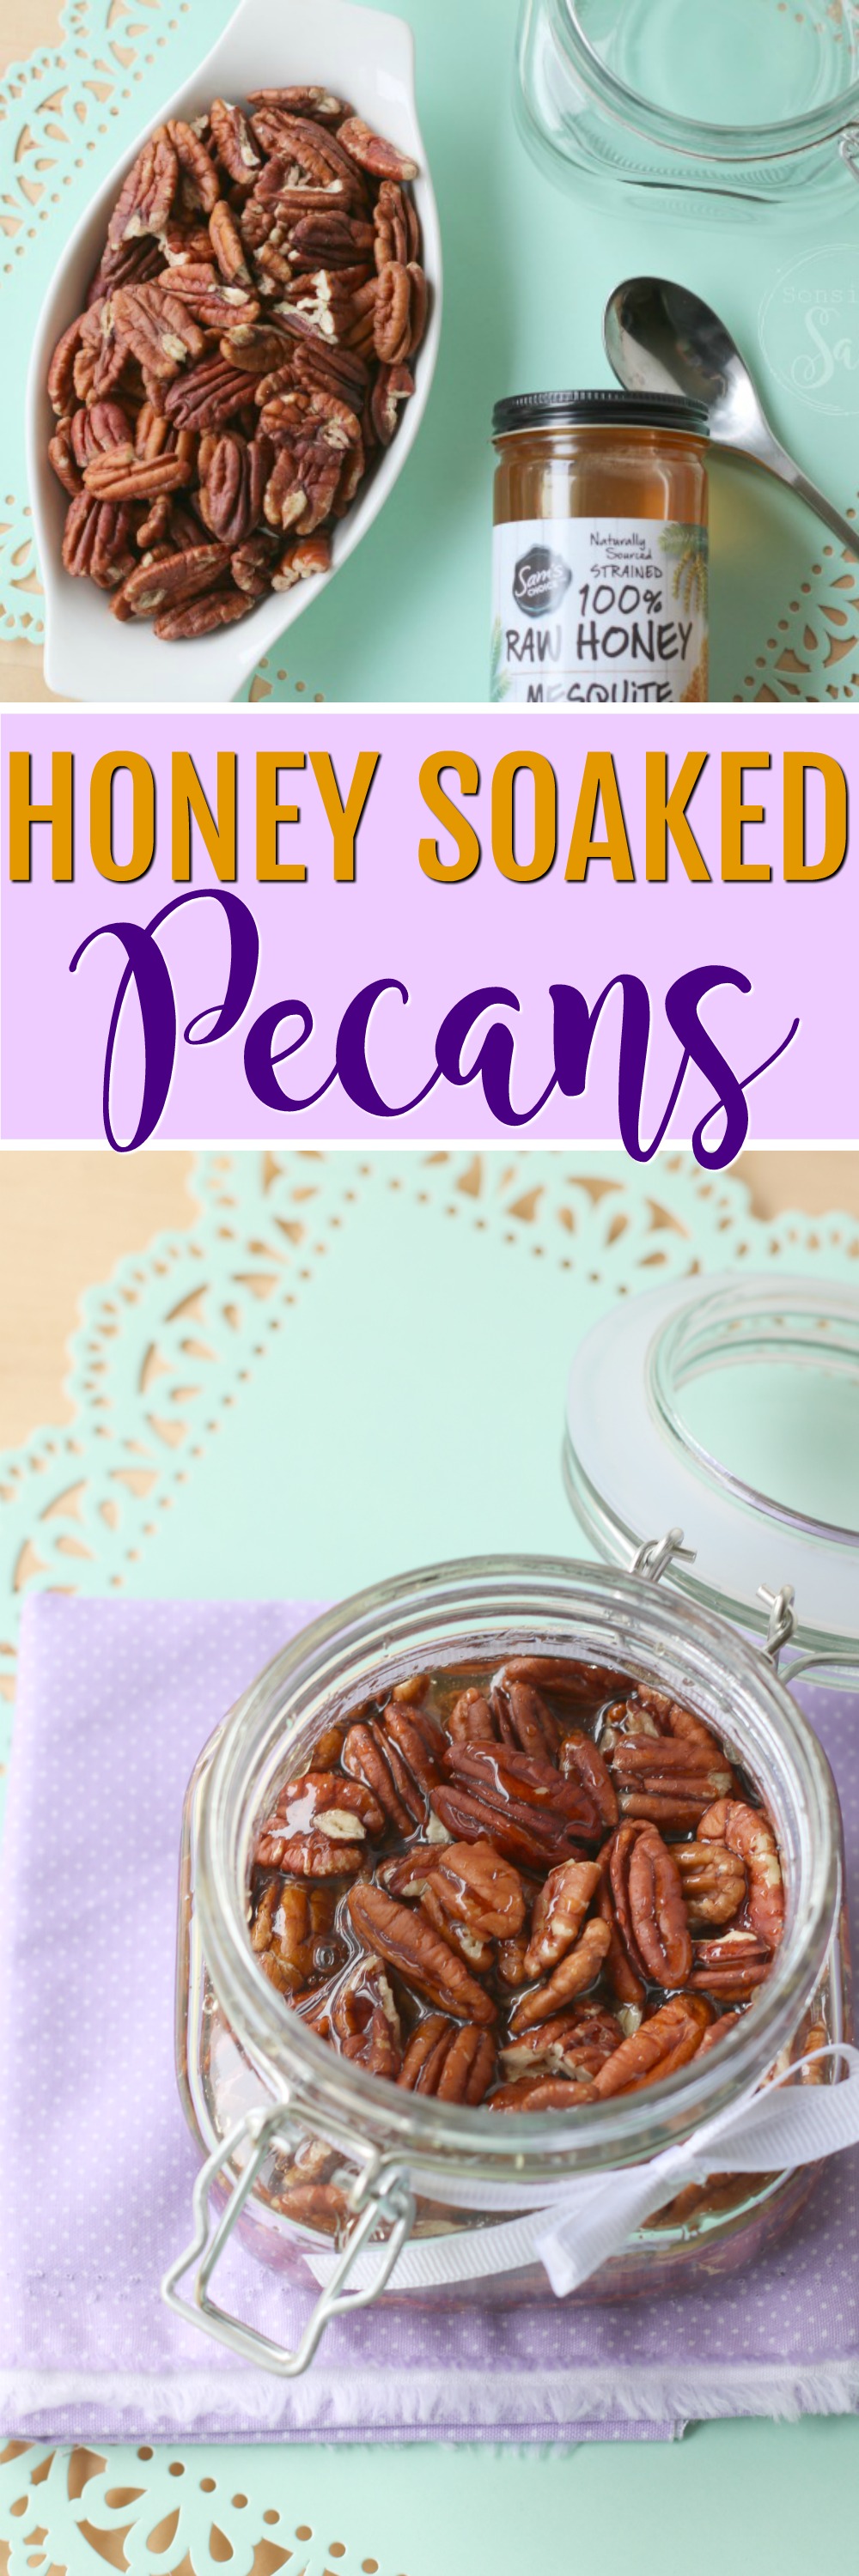 How to Make Honey Soaked Pecans - a Great Gift Idea! | SensiblySara.com